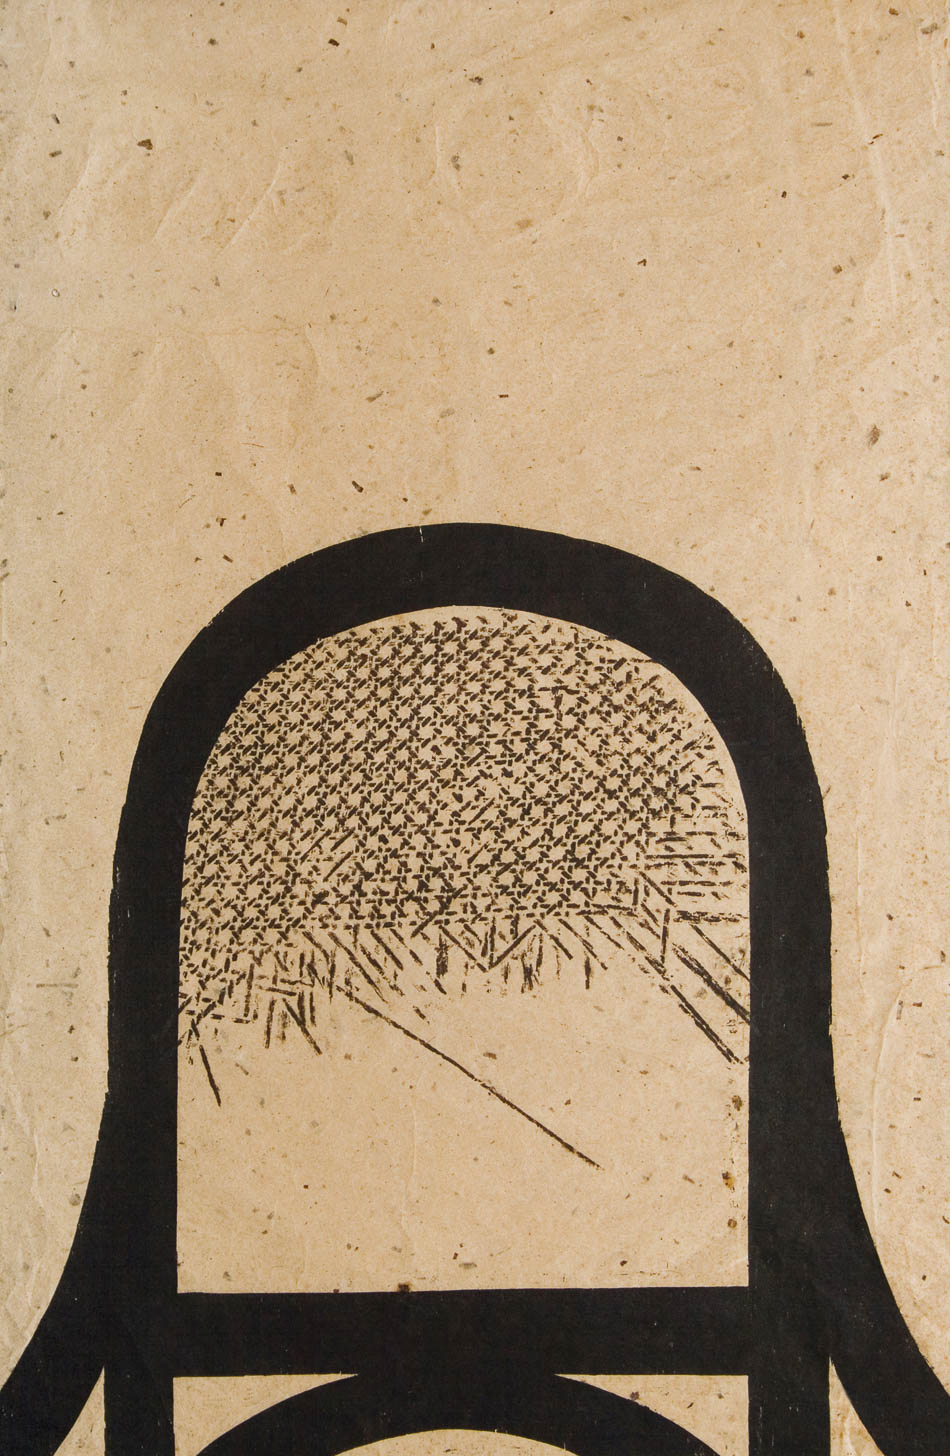 Antonio Martorell (Puerto Rico), Silla ('Chair'), n.d., edition unknown. Woodcut. 100 x 62 cm